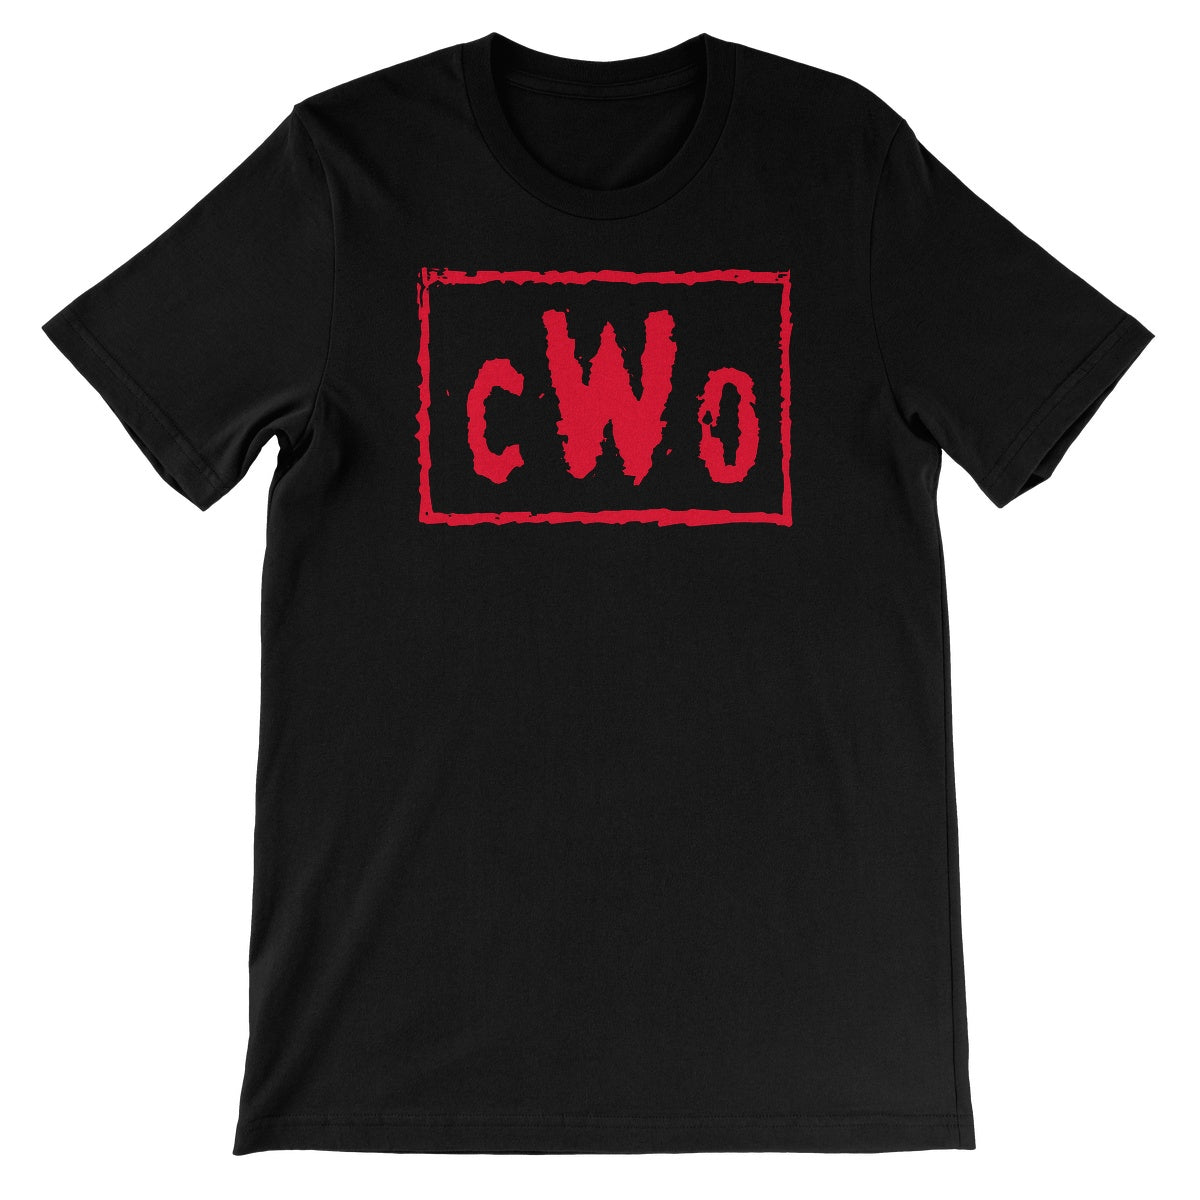 c.W.o CxE  Unisex Short Sleeve T-Shirt